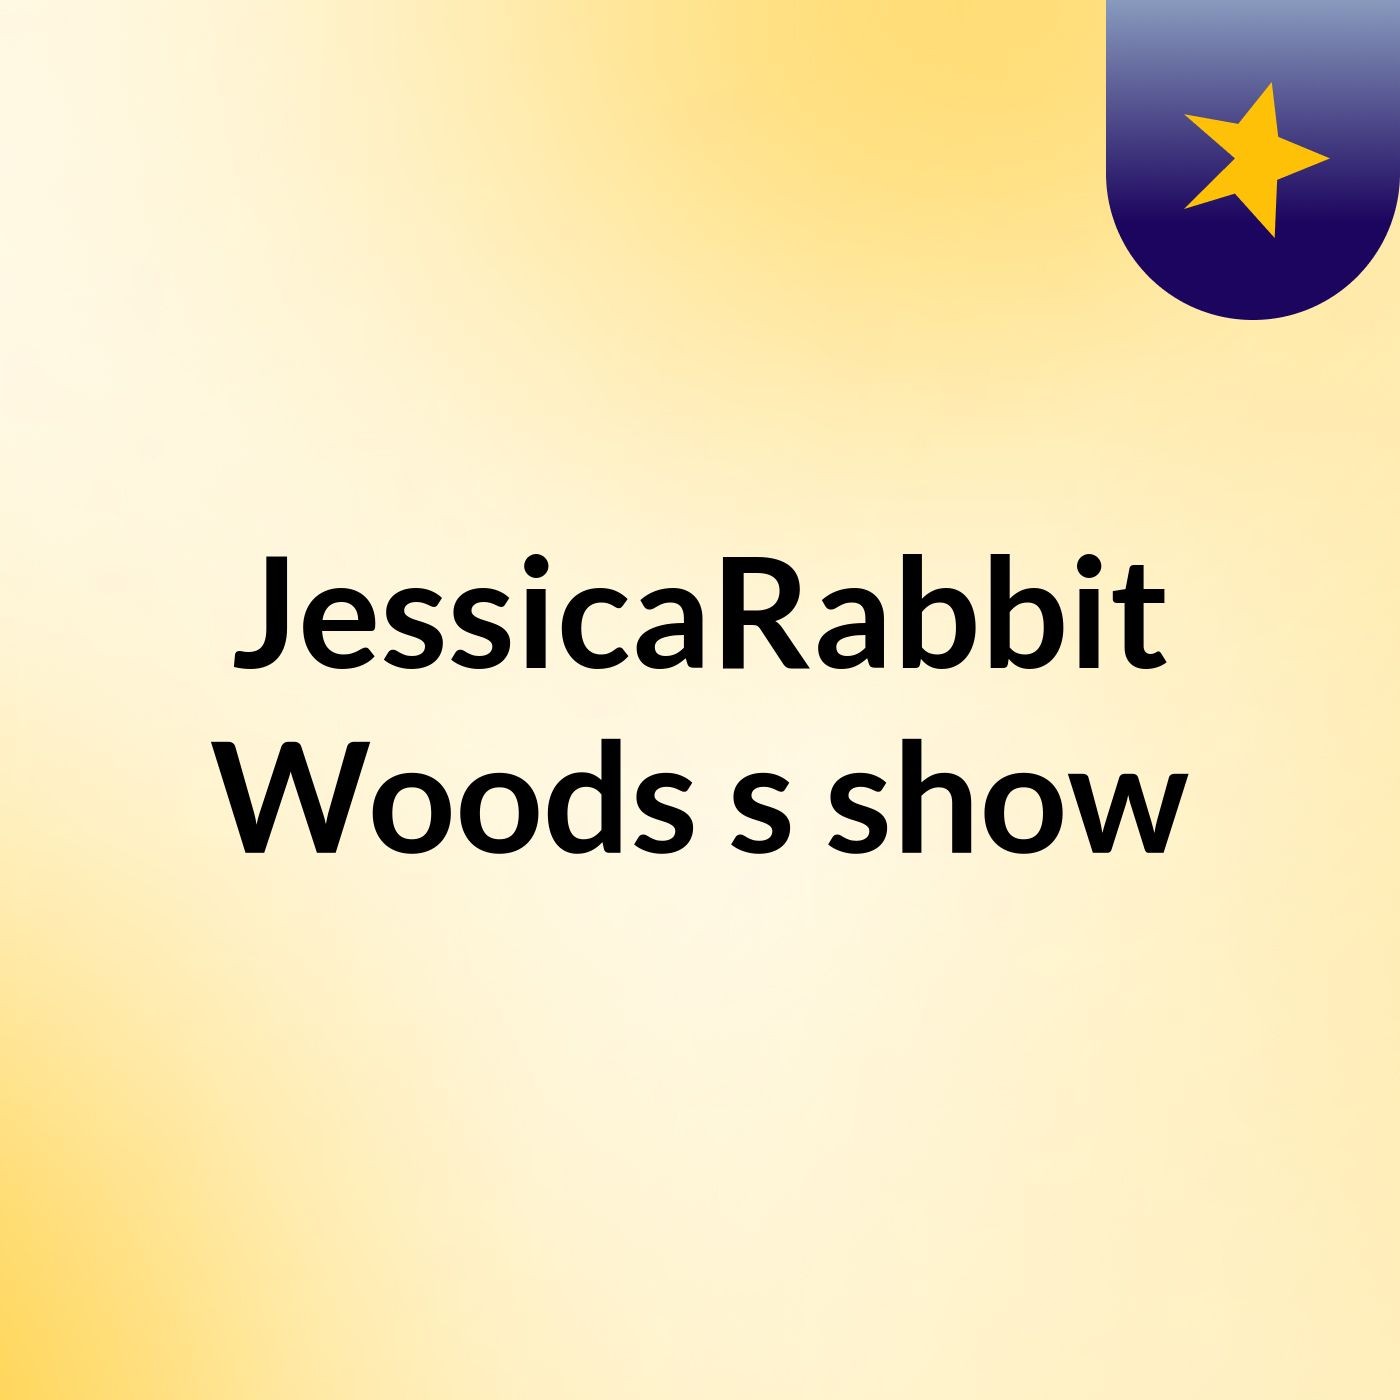 JessicaRabbit Woods's show